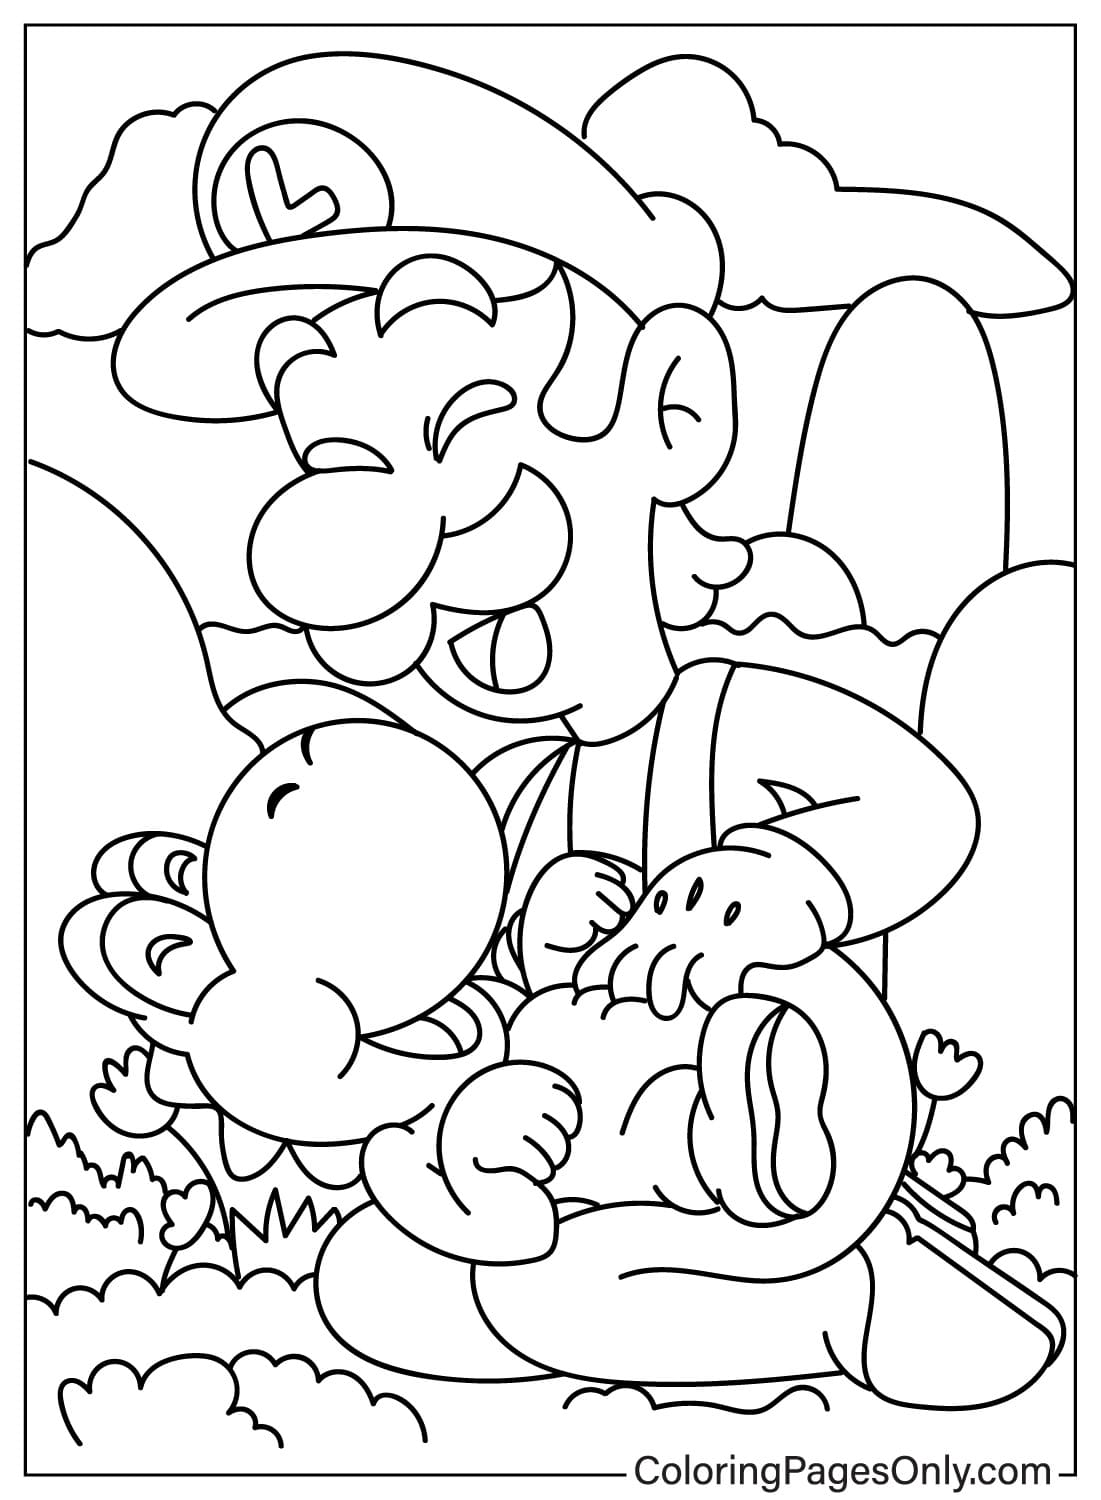 Yoshi and Luigi Coloring Page